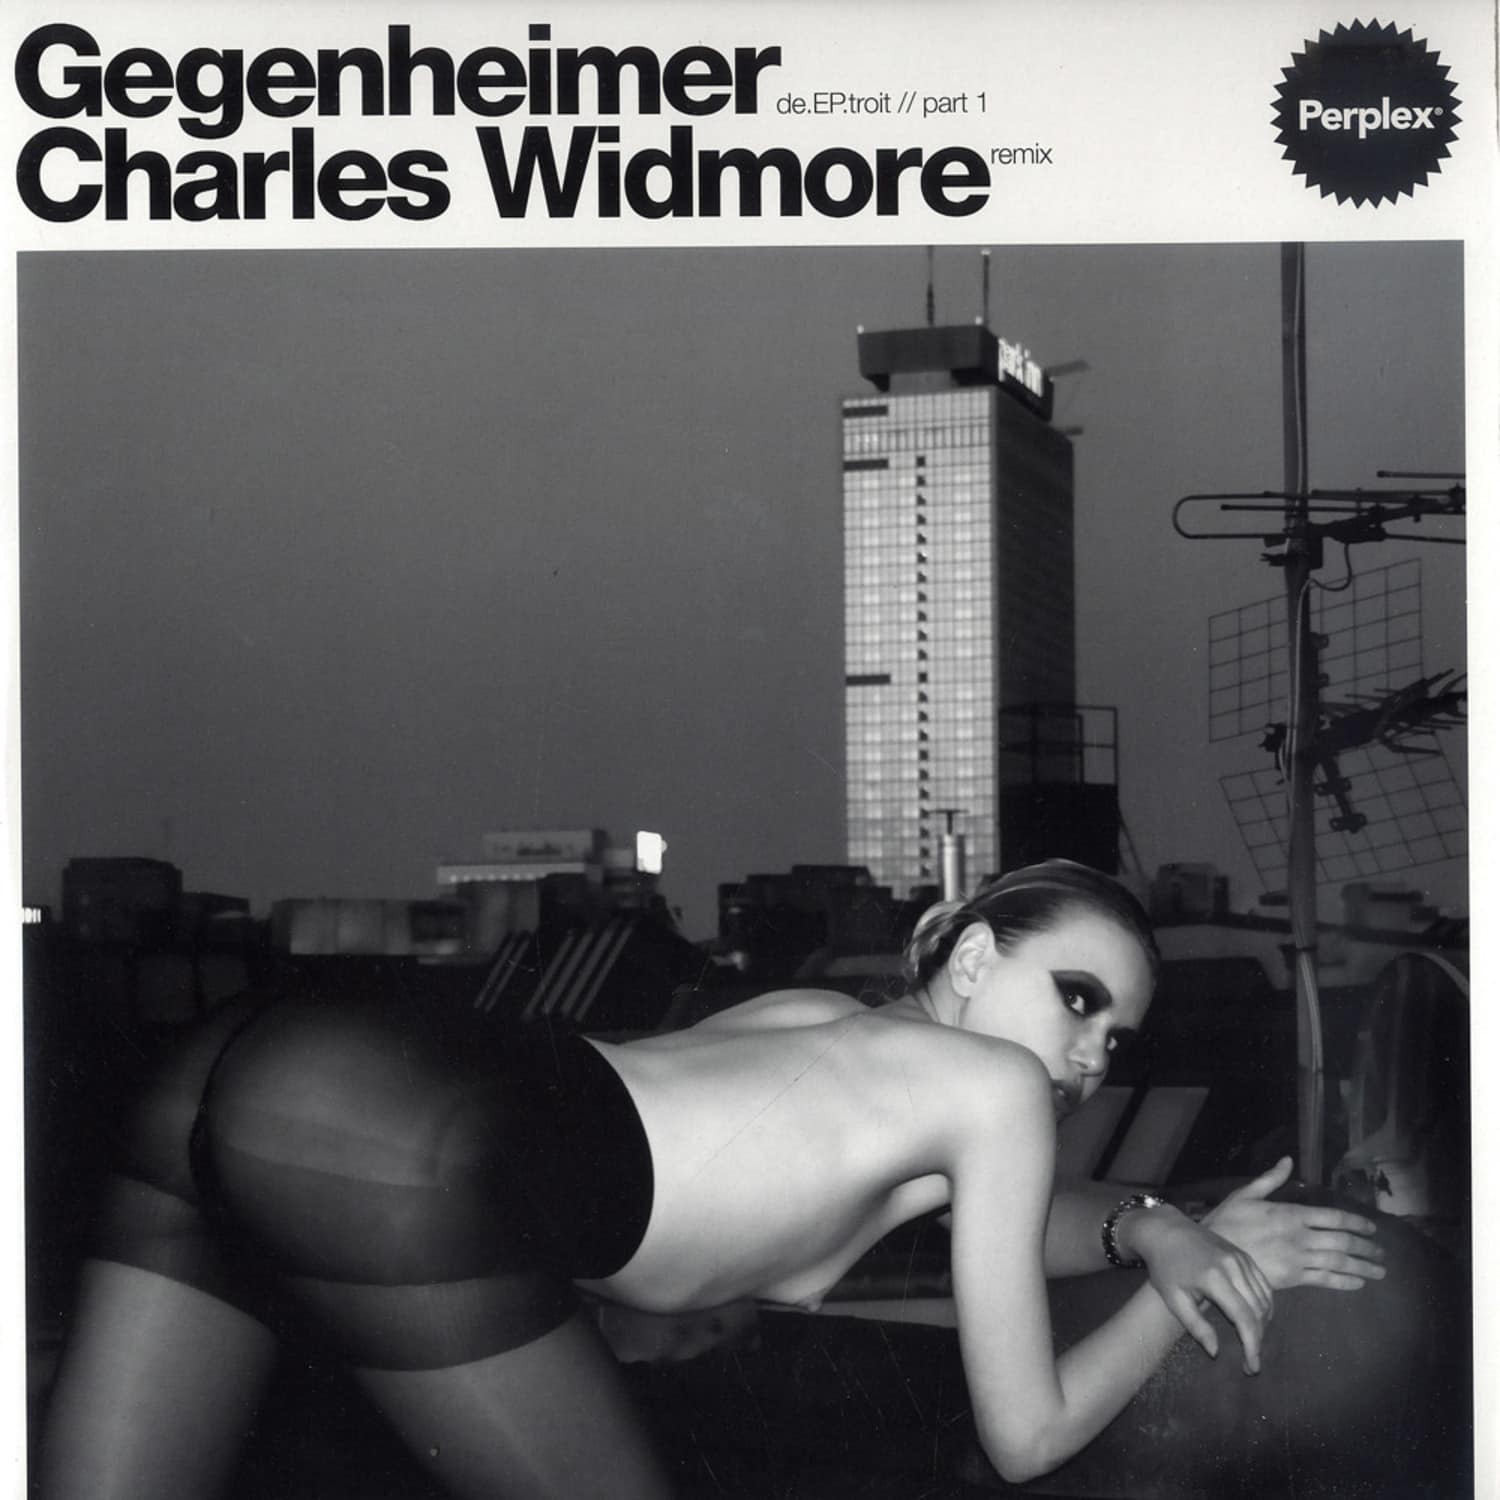 Gegenheimer - De.EP.troit - Part 1 + Charles Widmore remix